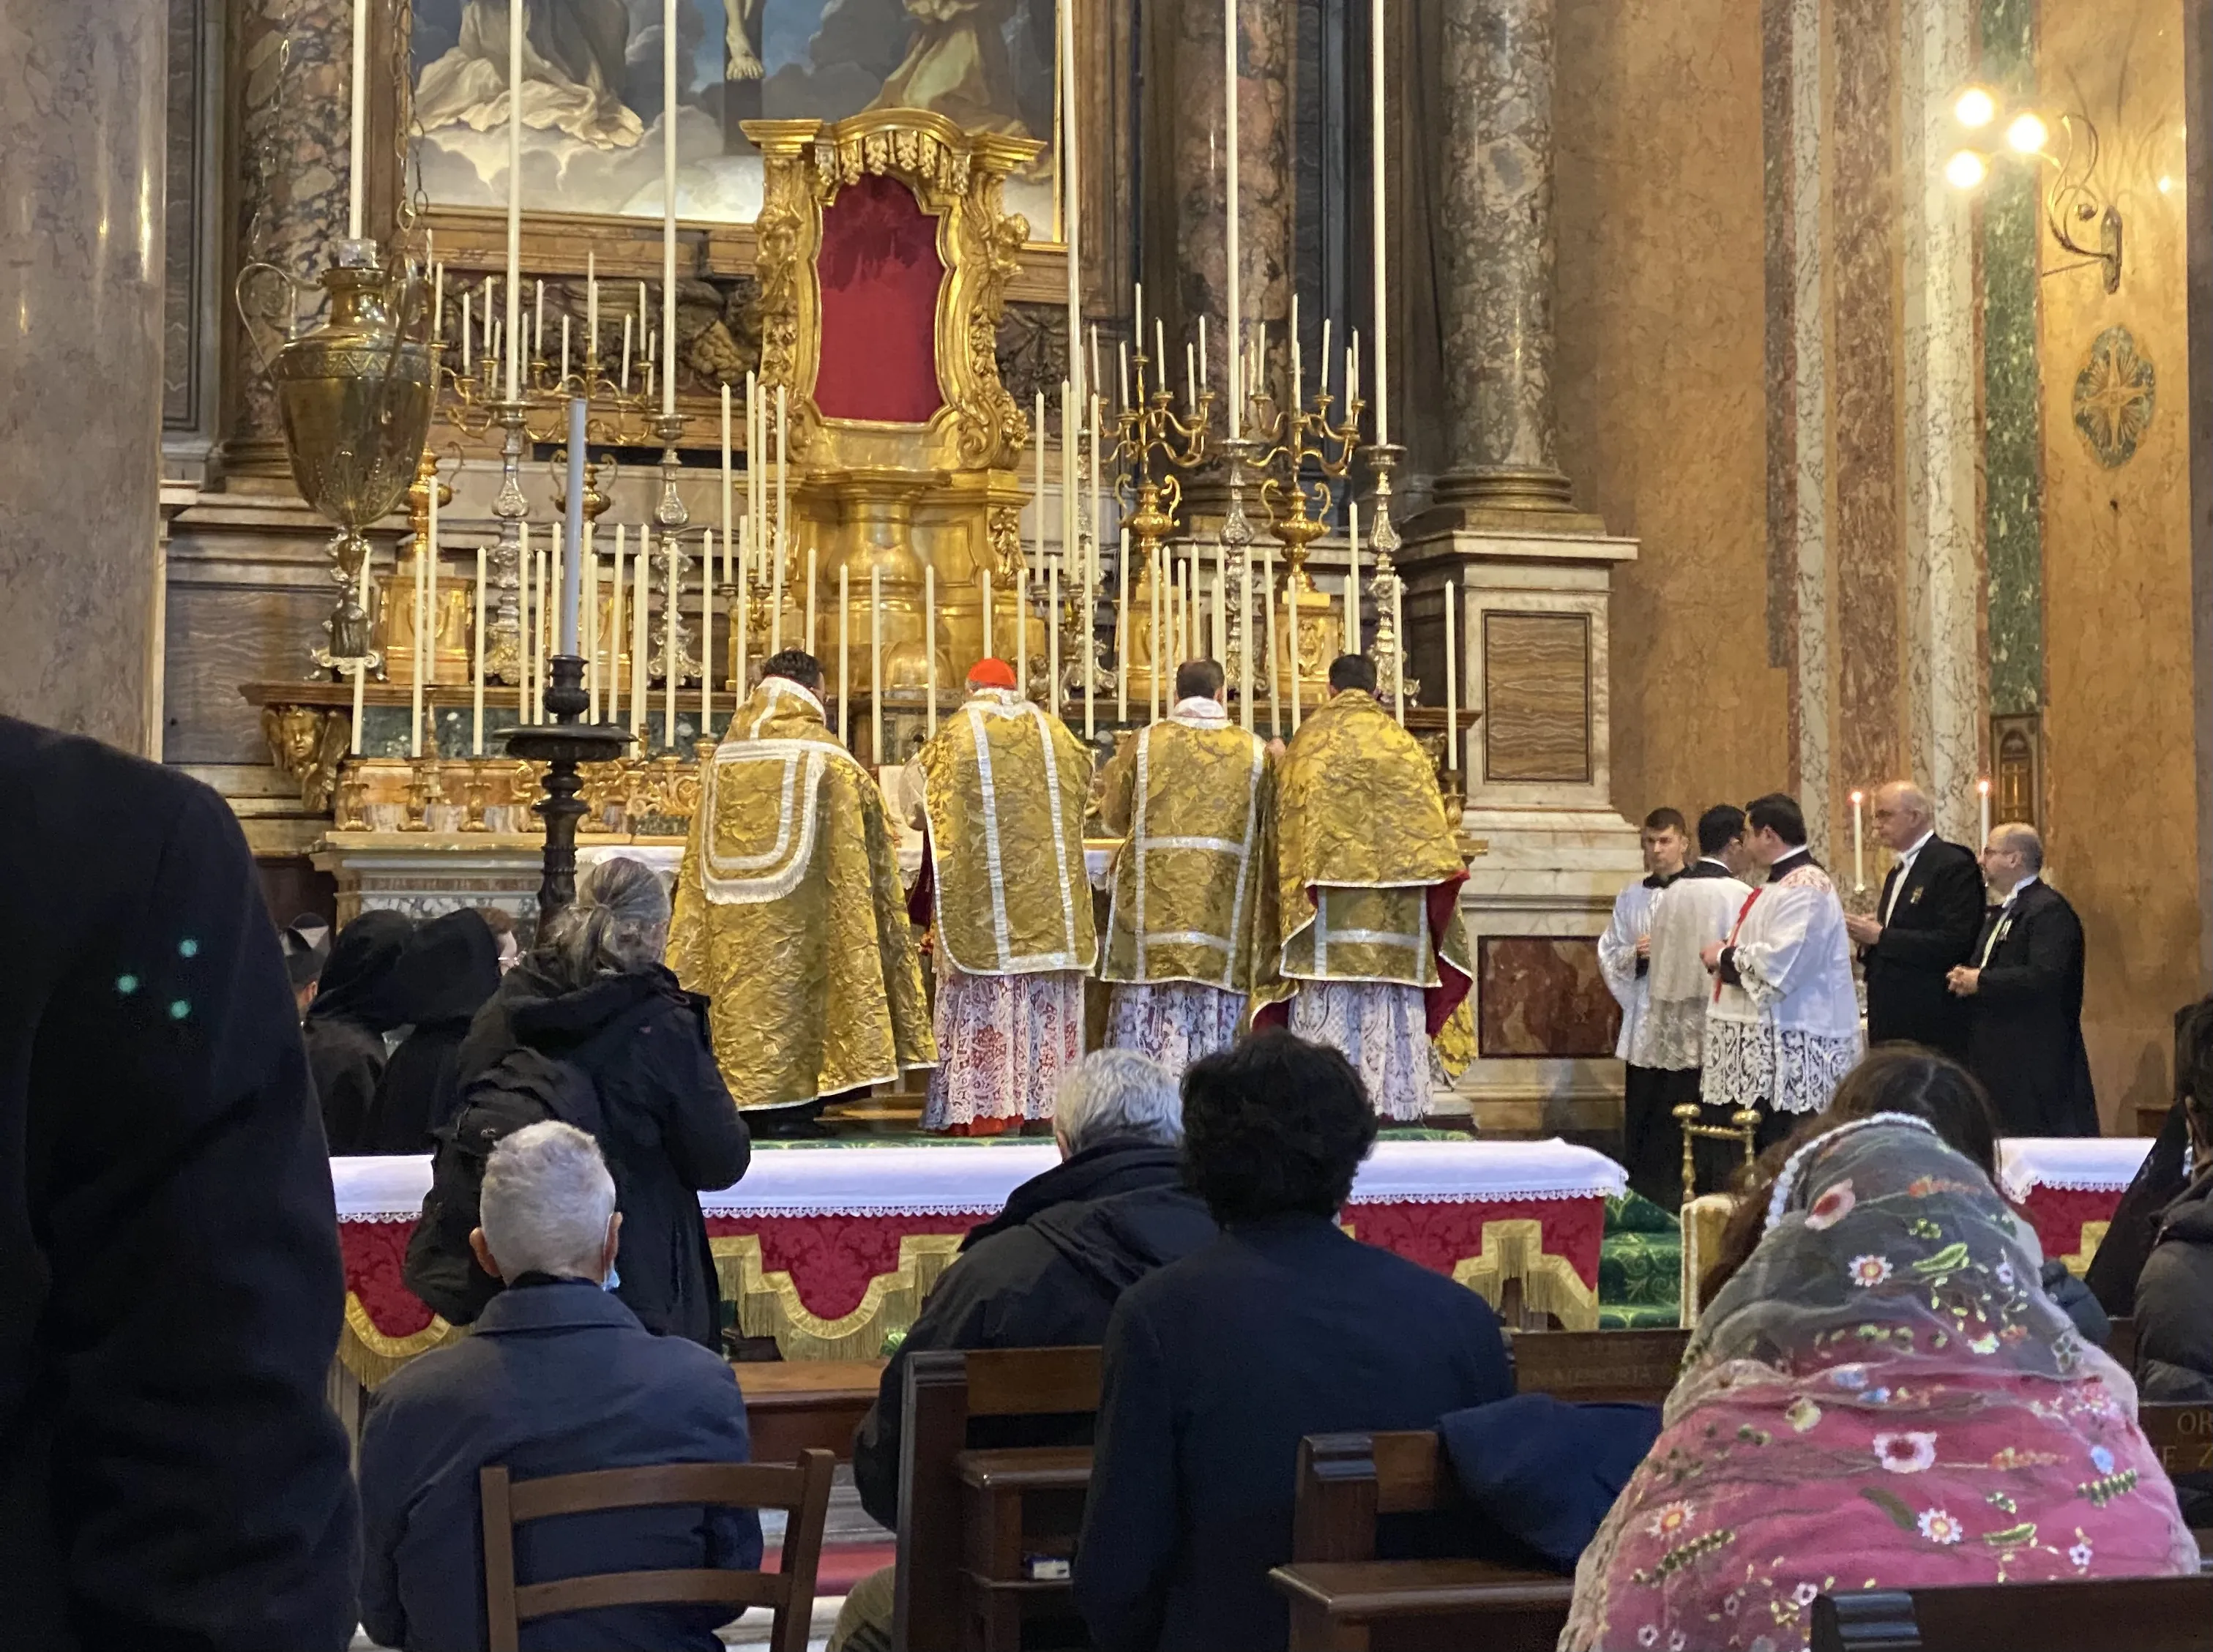 Priests celebrate the Traditional Latin Mass at FSSP’s parish in Rome, Santissima Trinità dei Pellegrini. Credit: Matthew Santucci